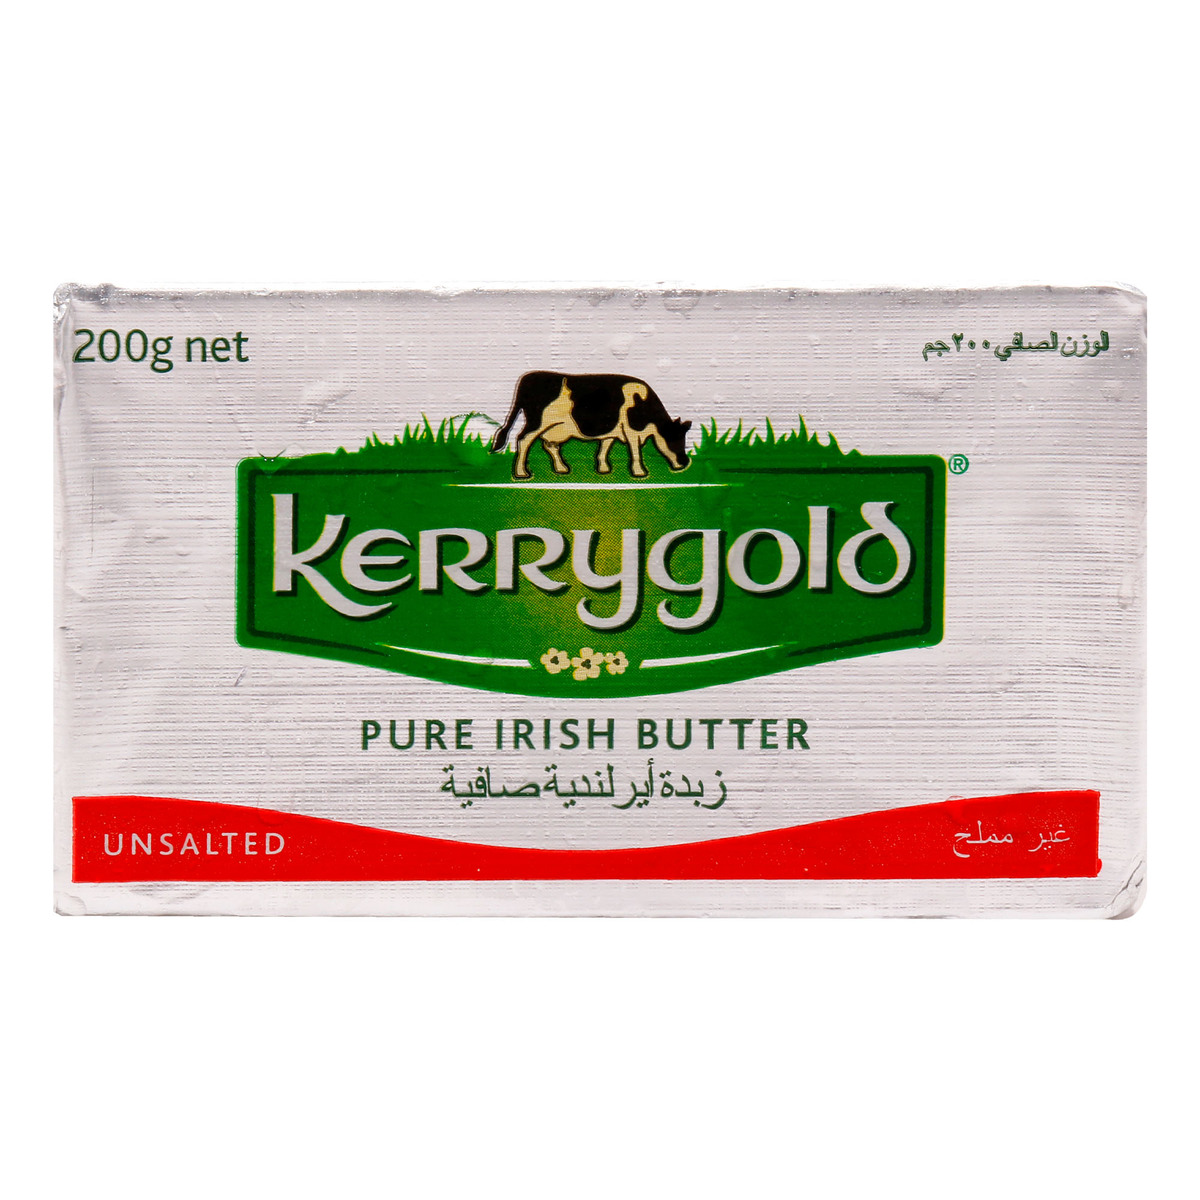 Kerrygold Pure Irish Butter Unsalted 200g